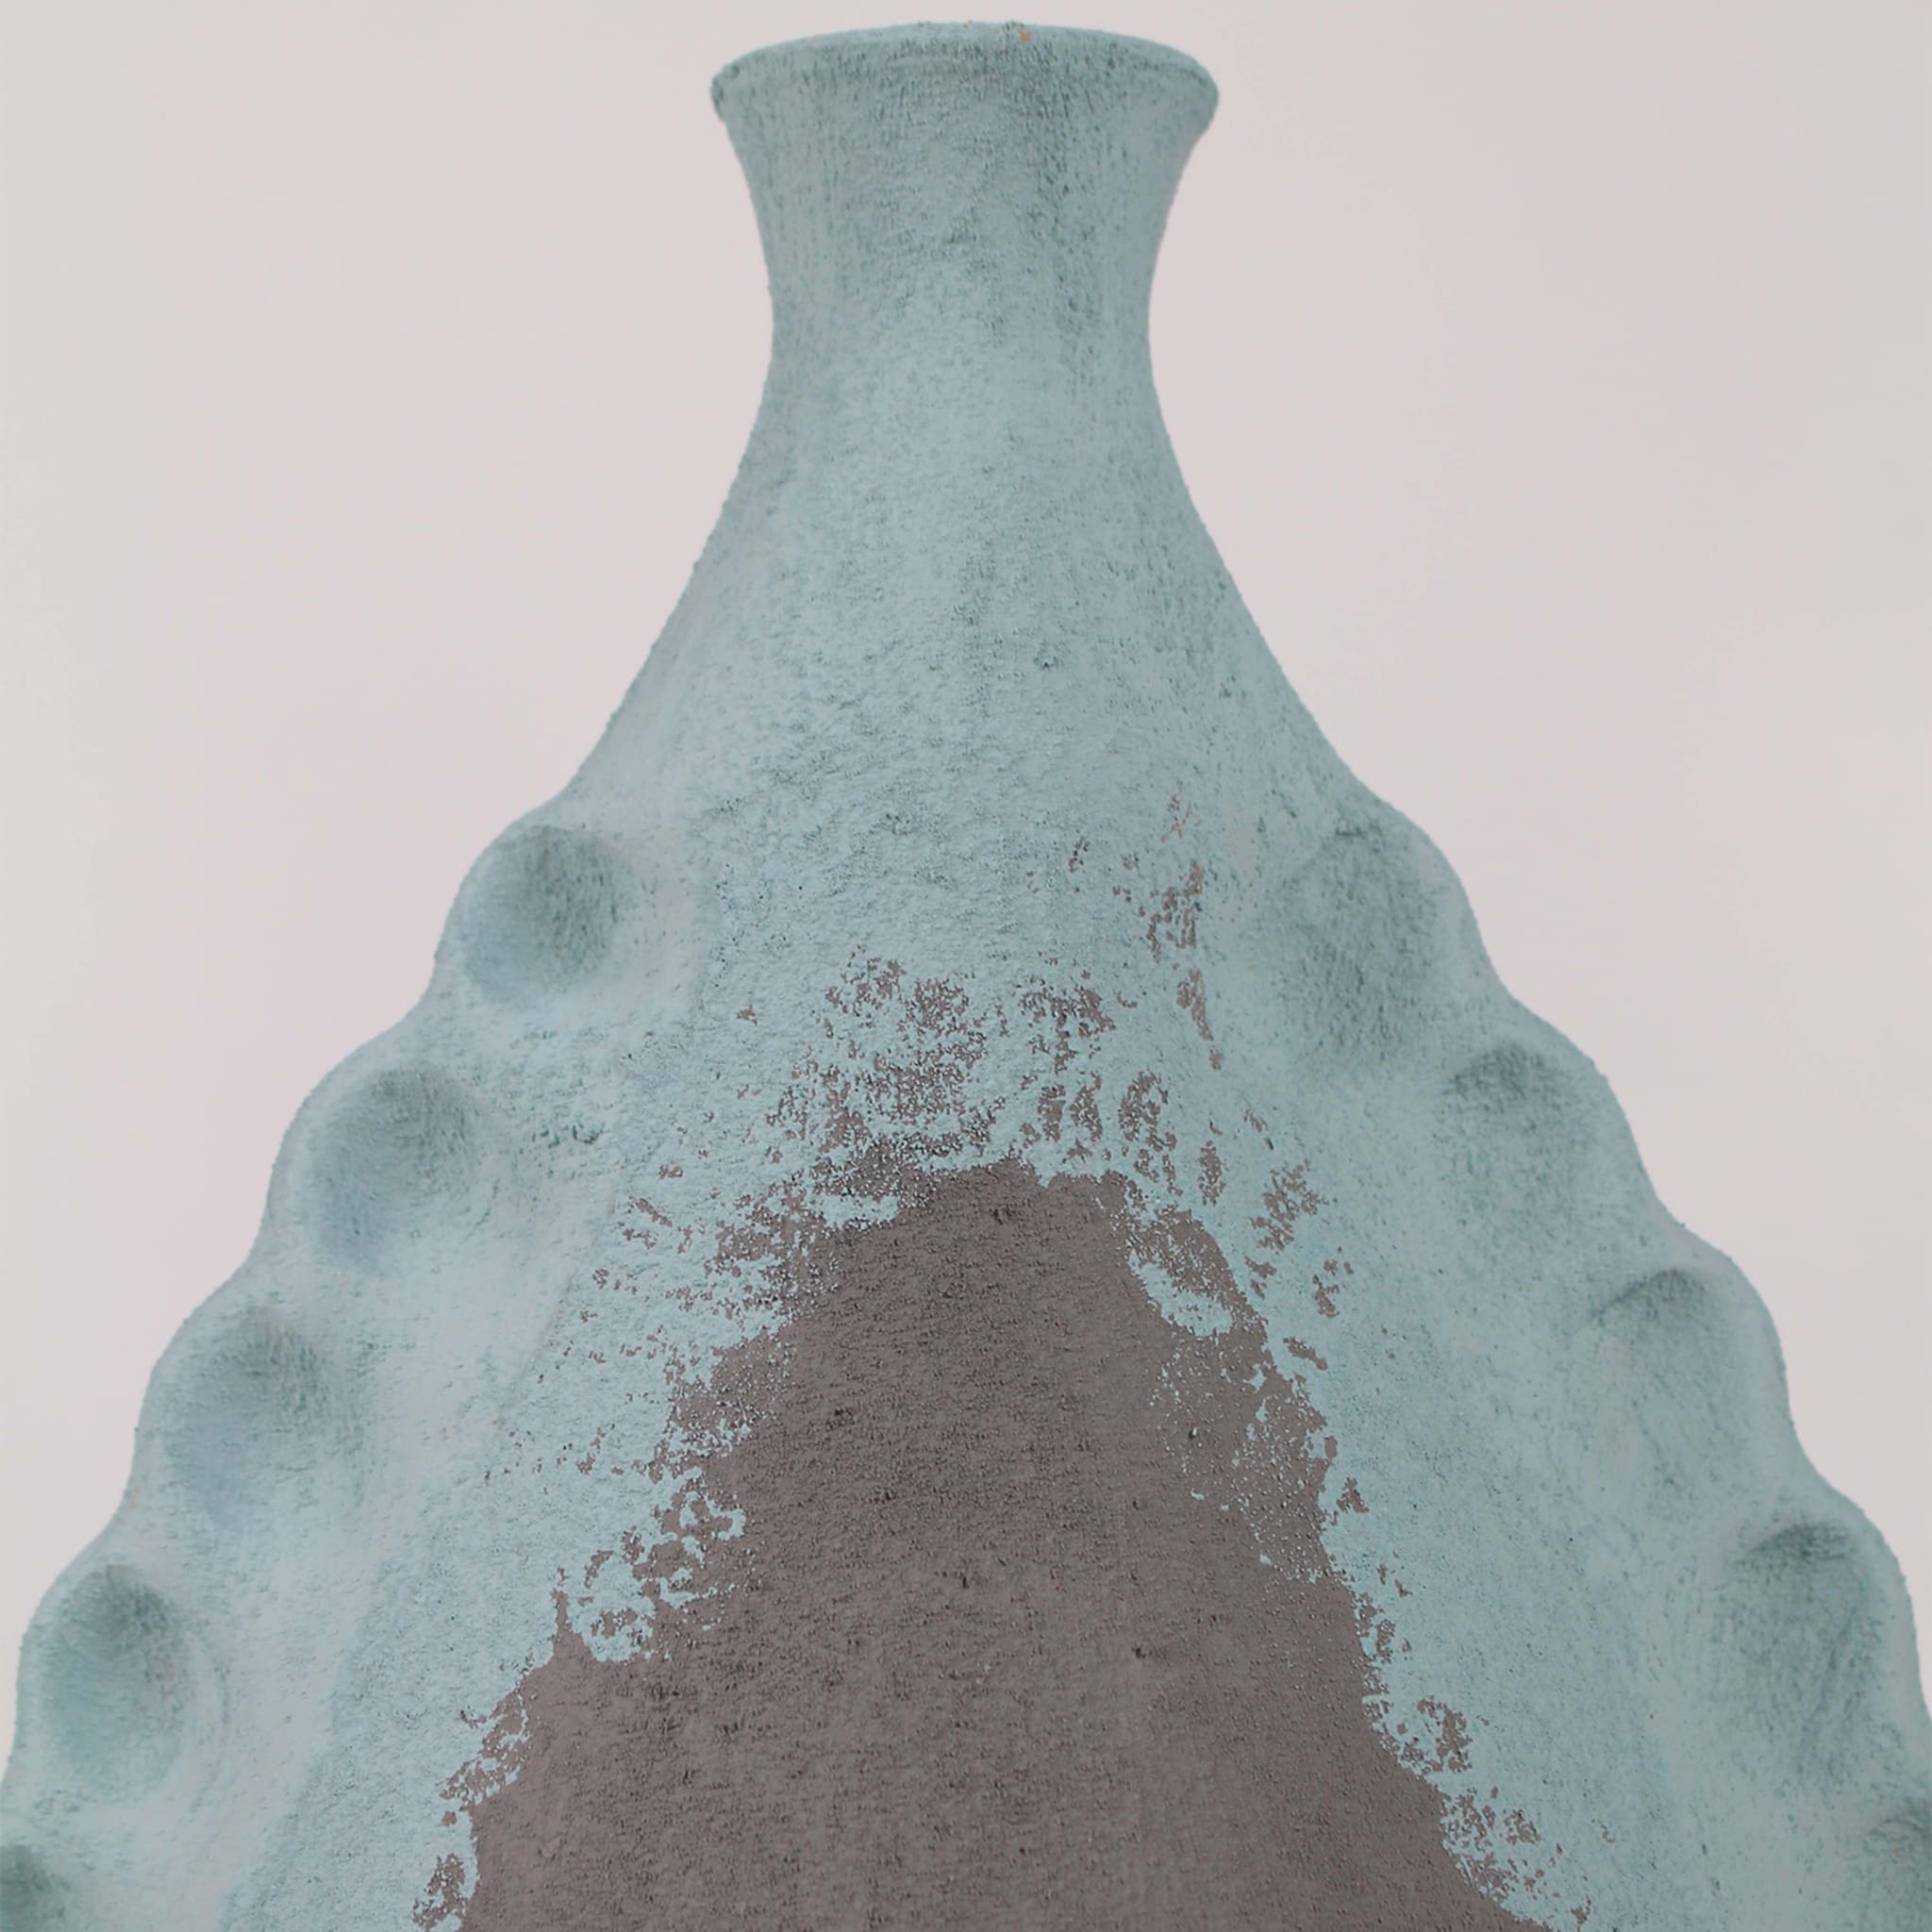 Almond-Shaped Azure & Gray Vase 20 by Mascia Meccani - Alternative view 3